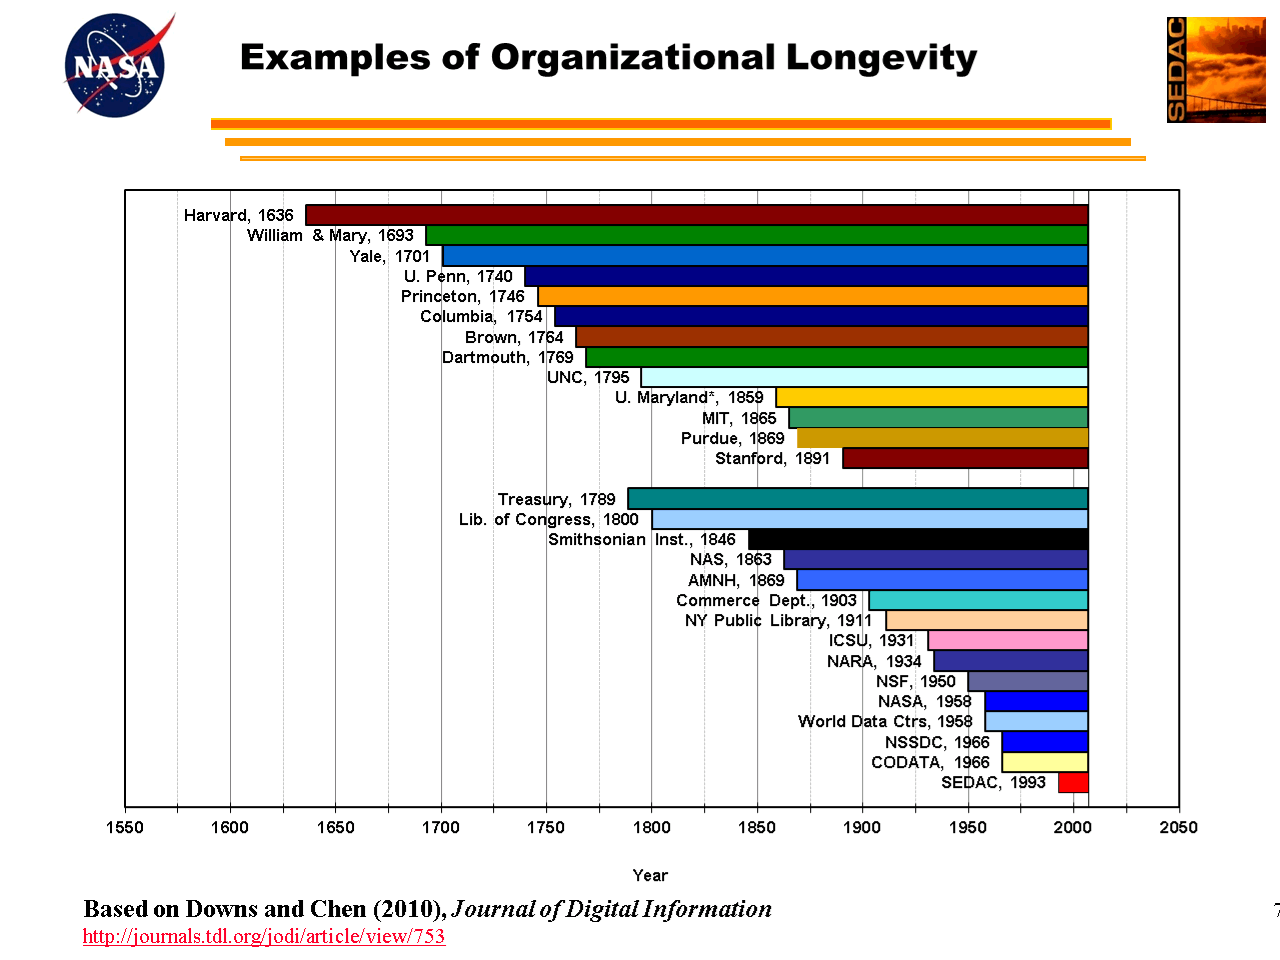 figure showing organizational longevity statistics